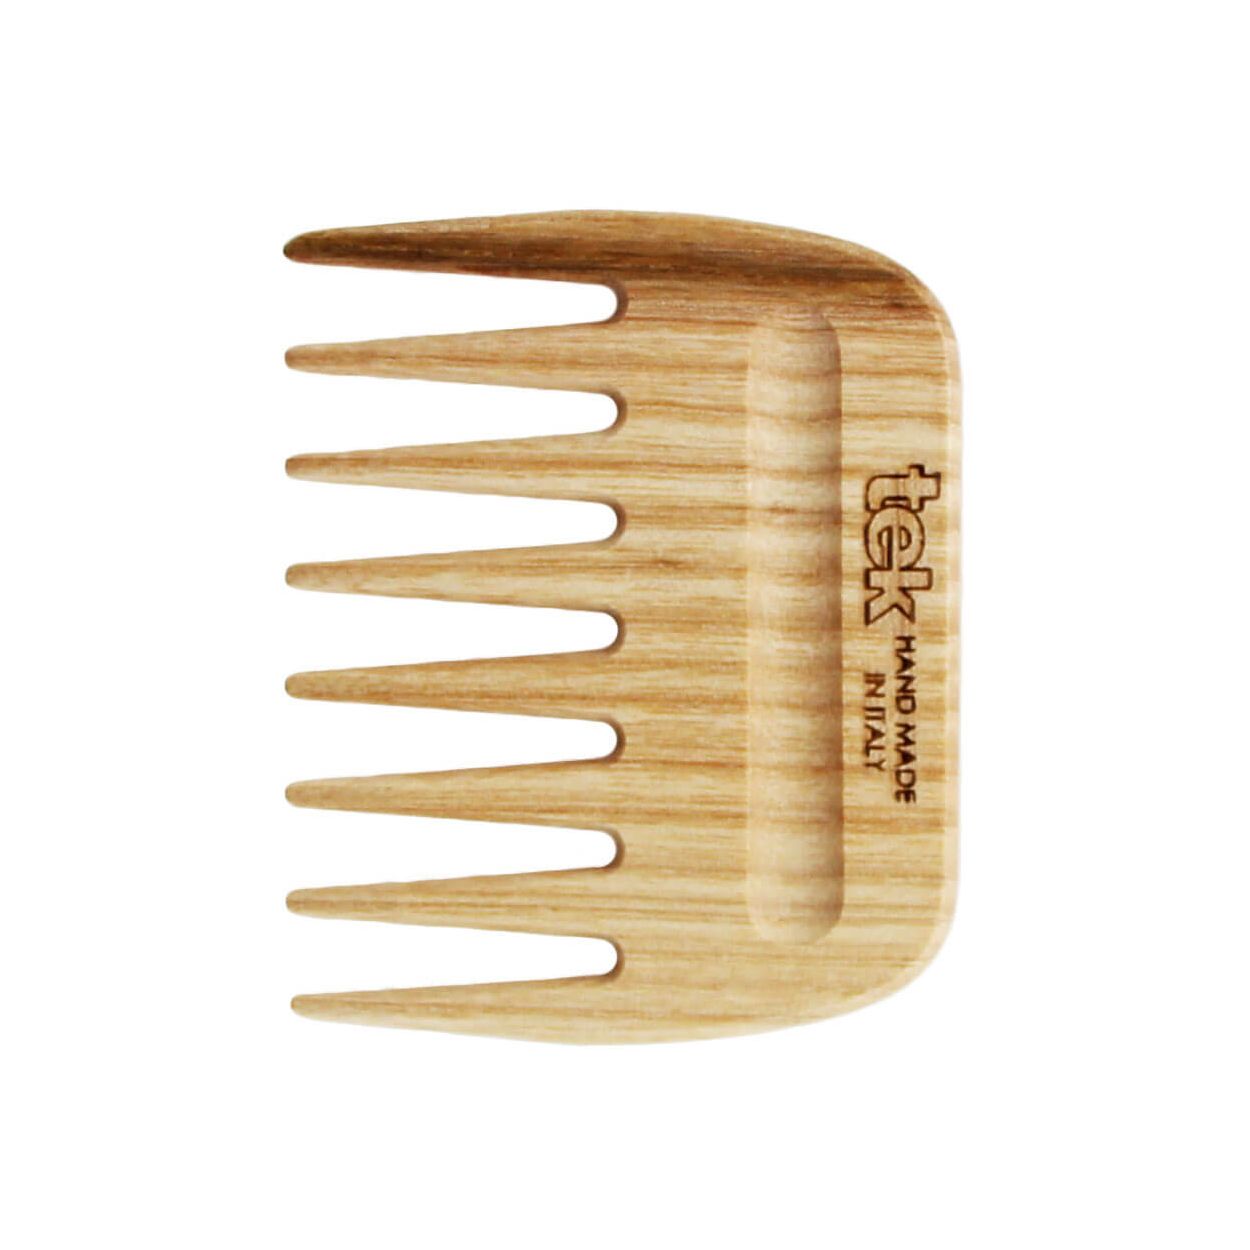 Afro Pick Ash Wood Comb